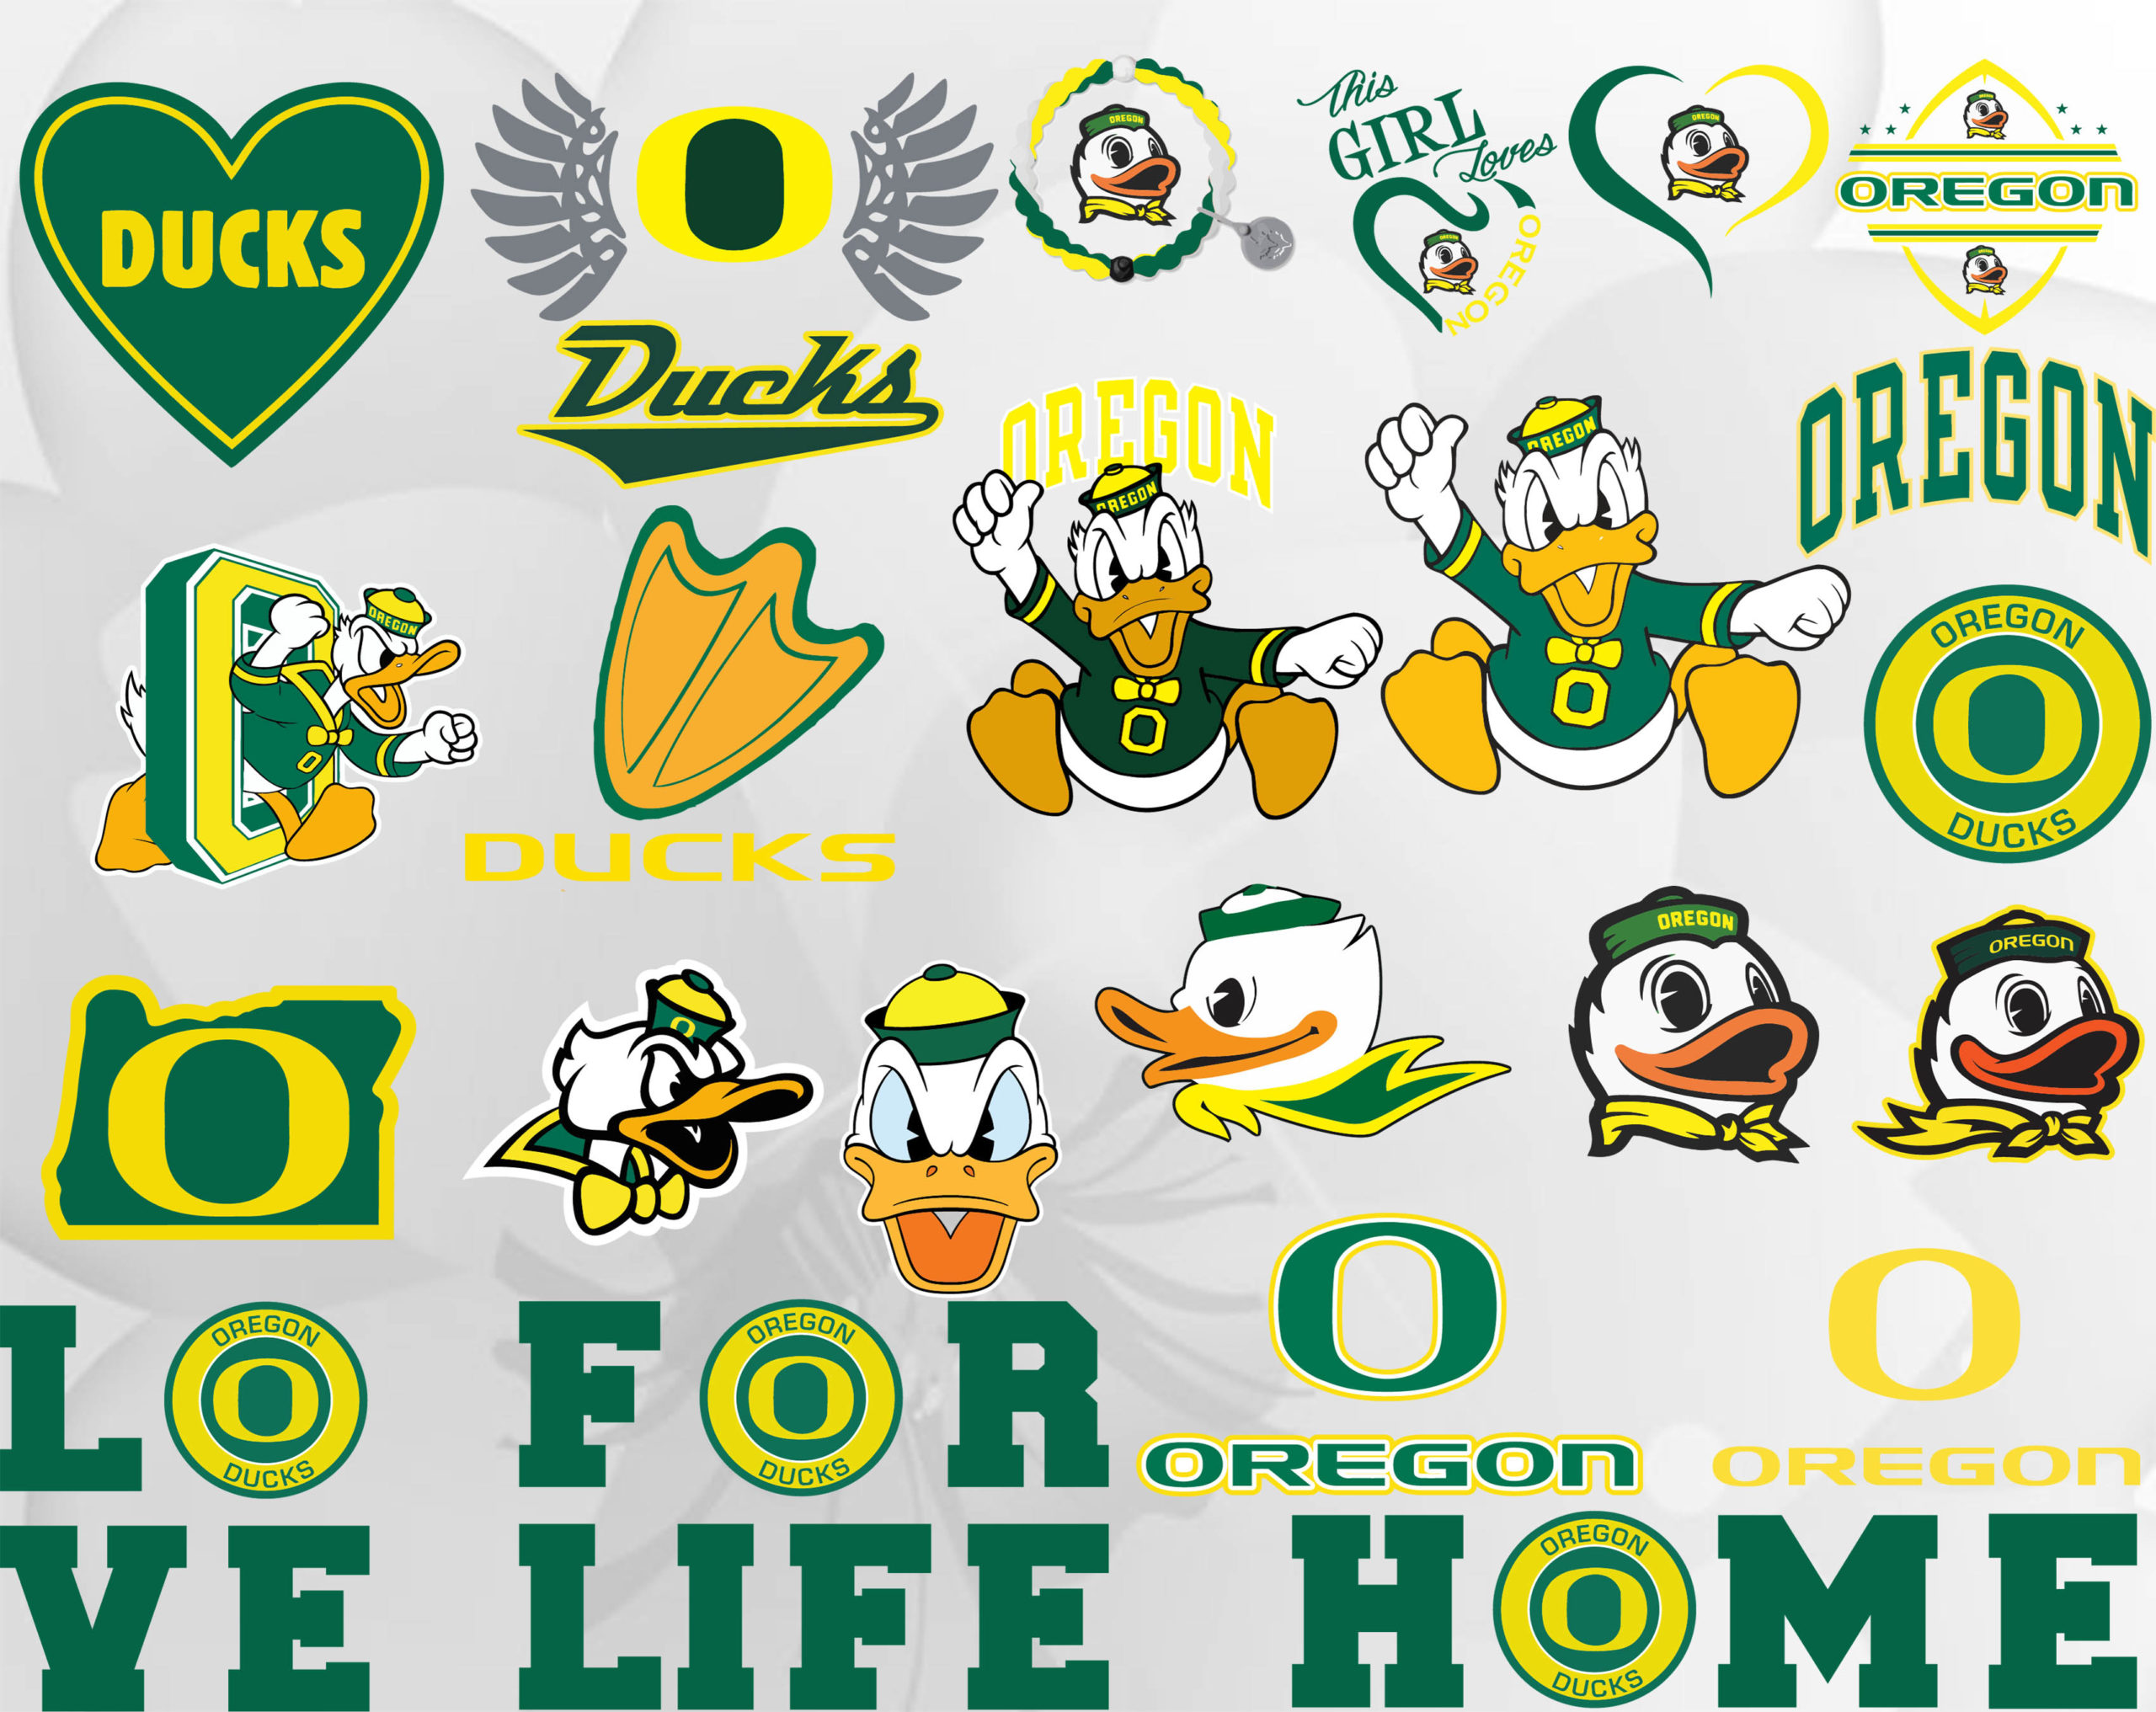 Oregon Duck Vector Logo